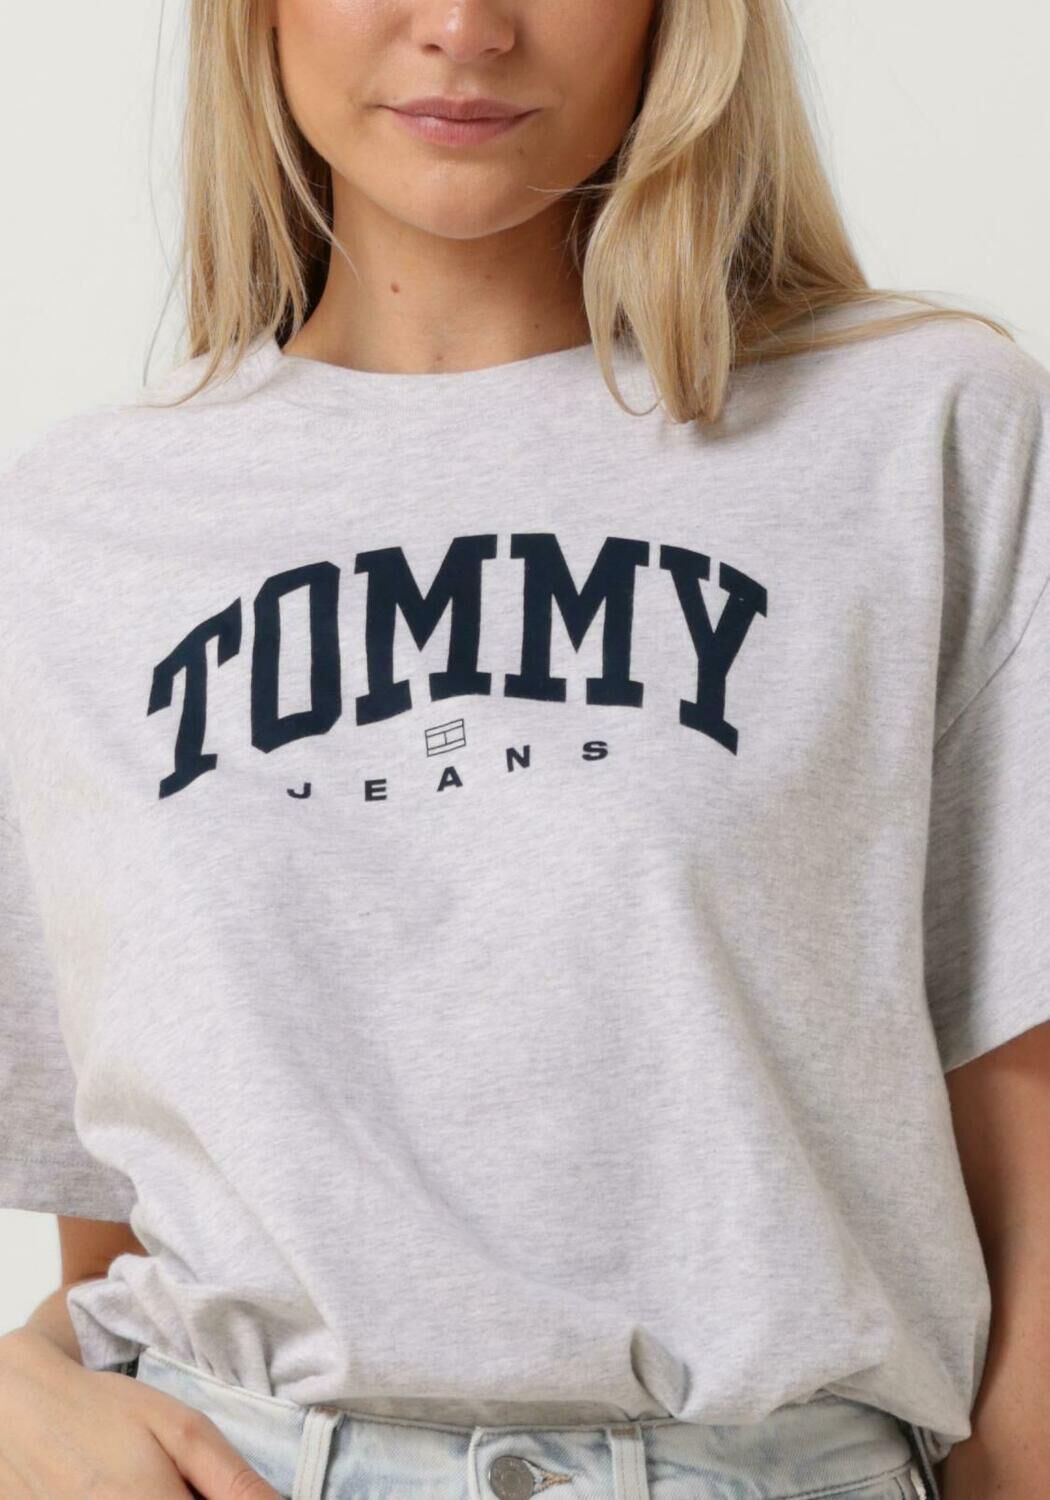 TOMMY JEANS Dames Tops & T-shirts Tjw Ovs Varsity 1 Tee Ext Lichtgrijs